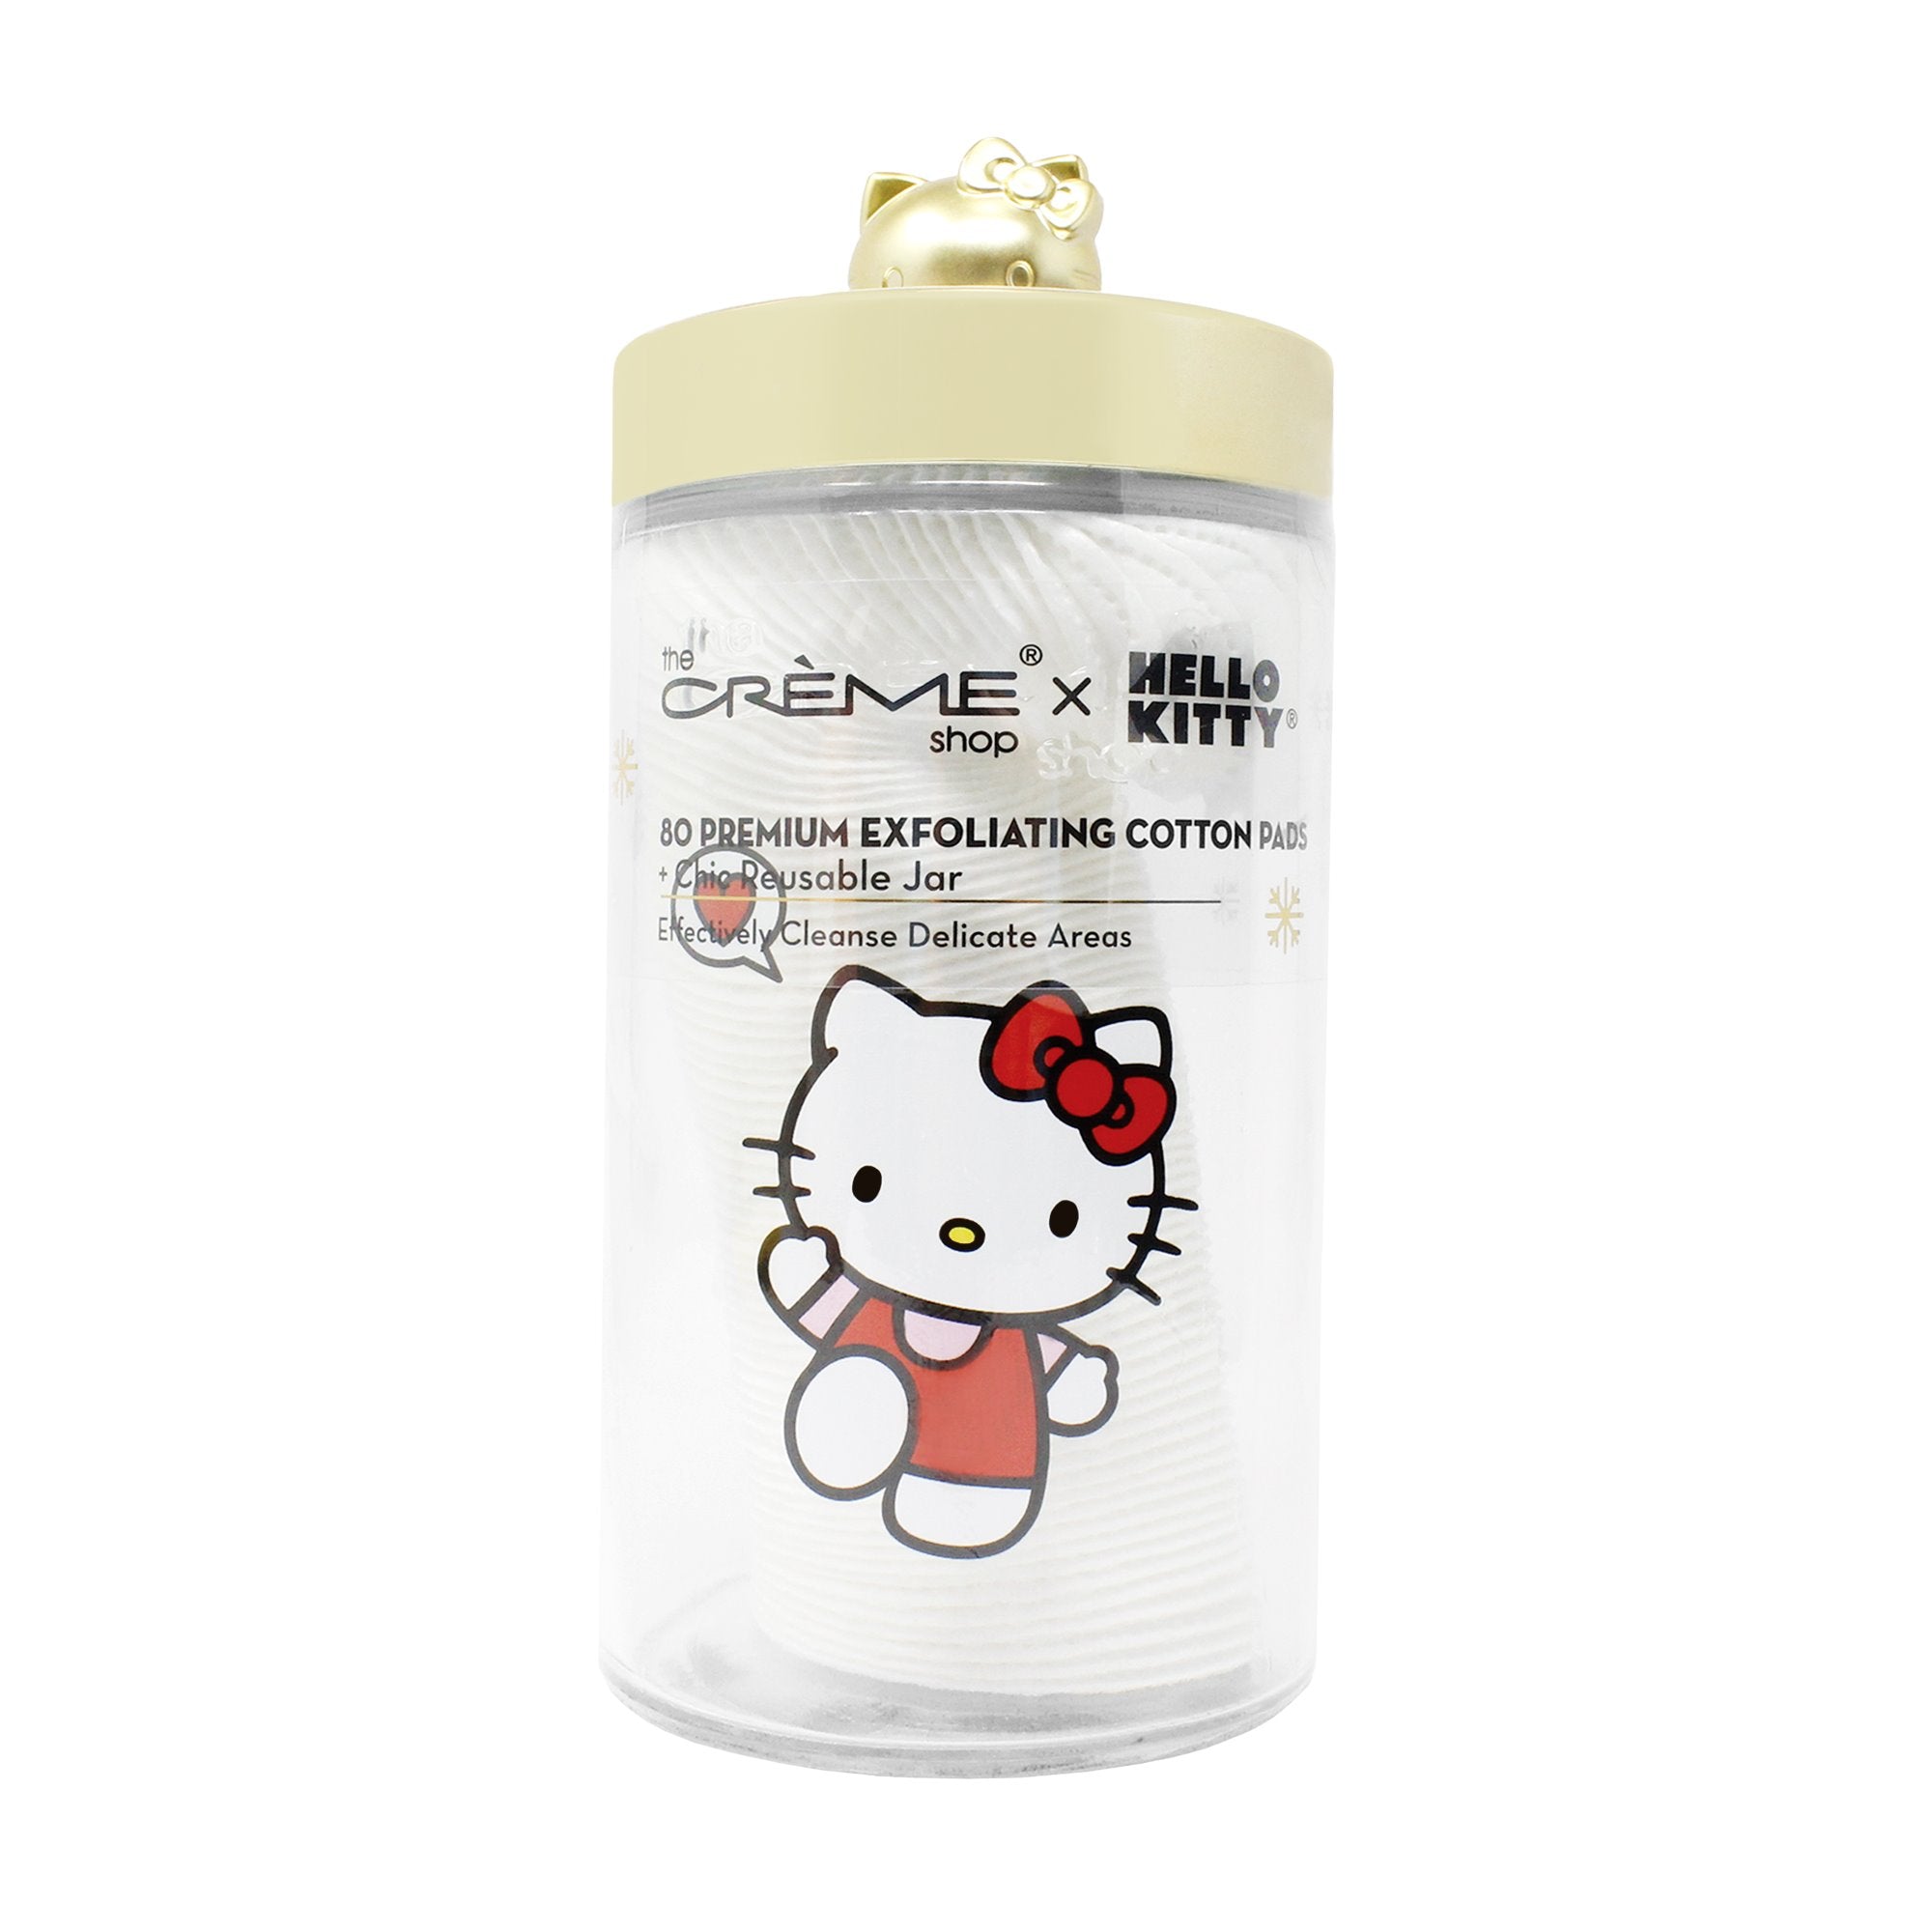 The Creme shop x Hello Kitty cotton swab ~ reusable glass jar &gold plastic  lid